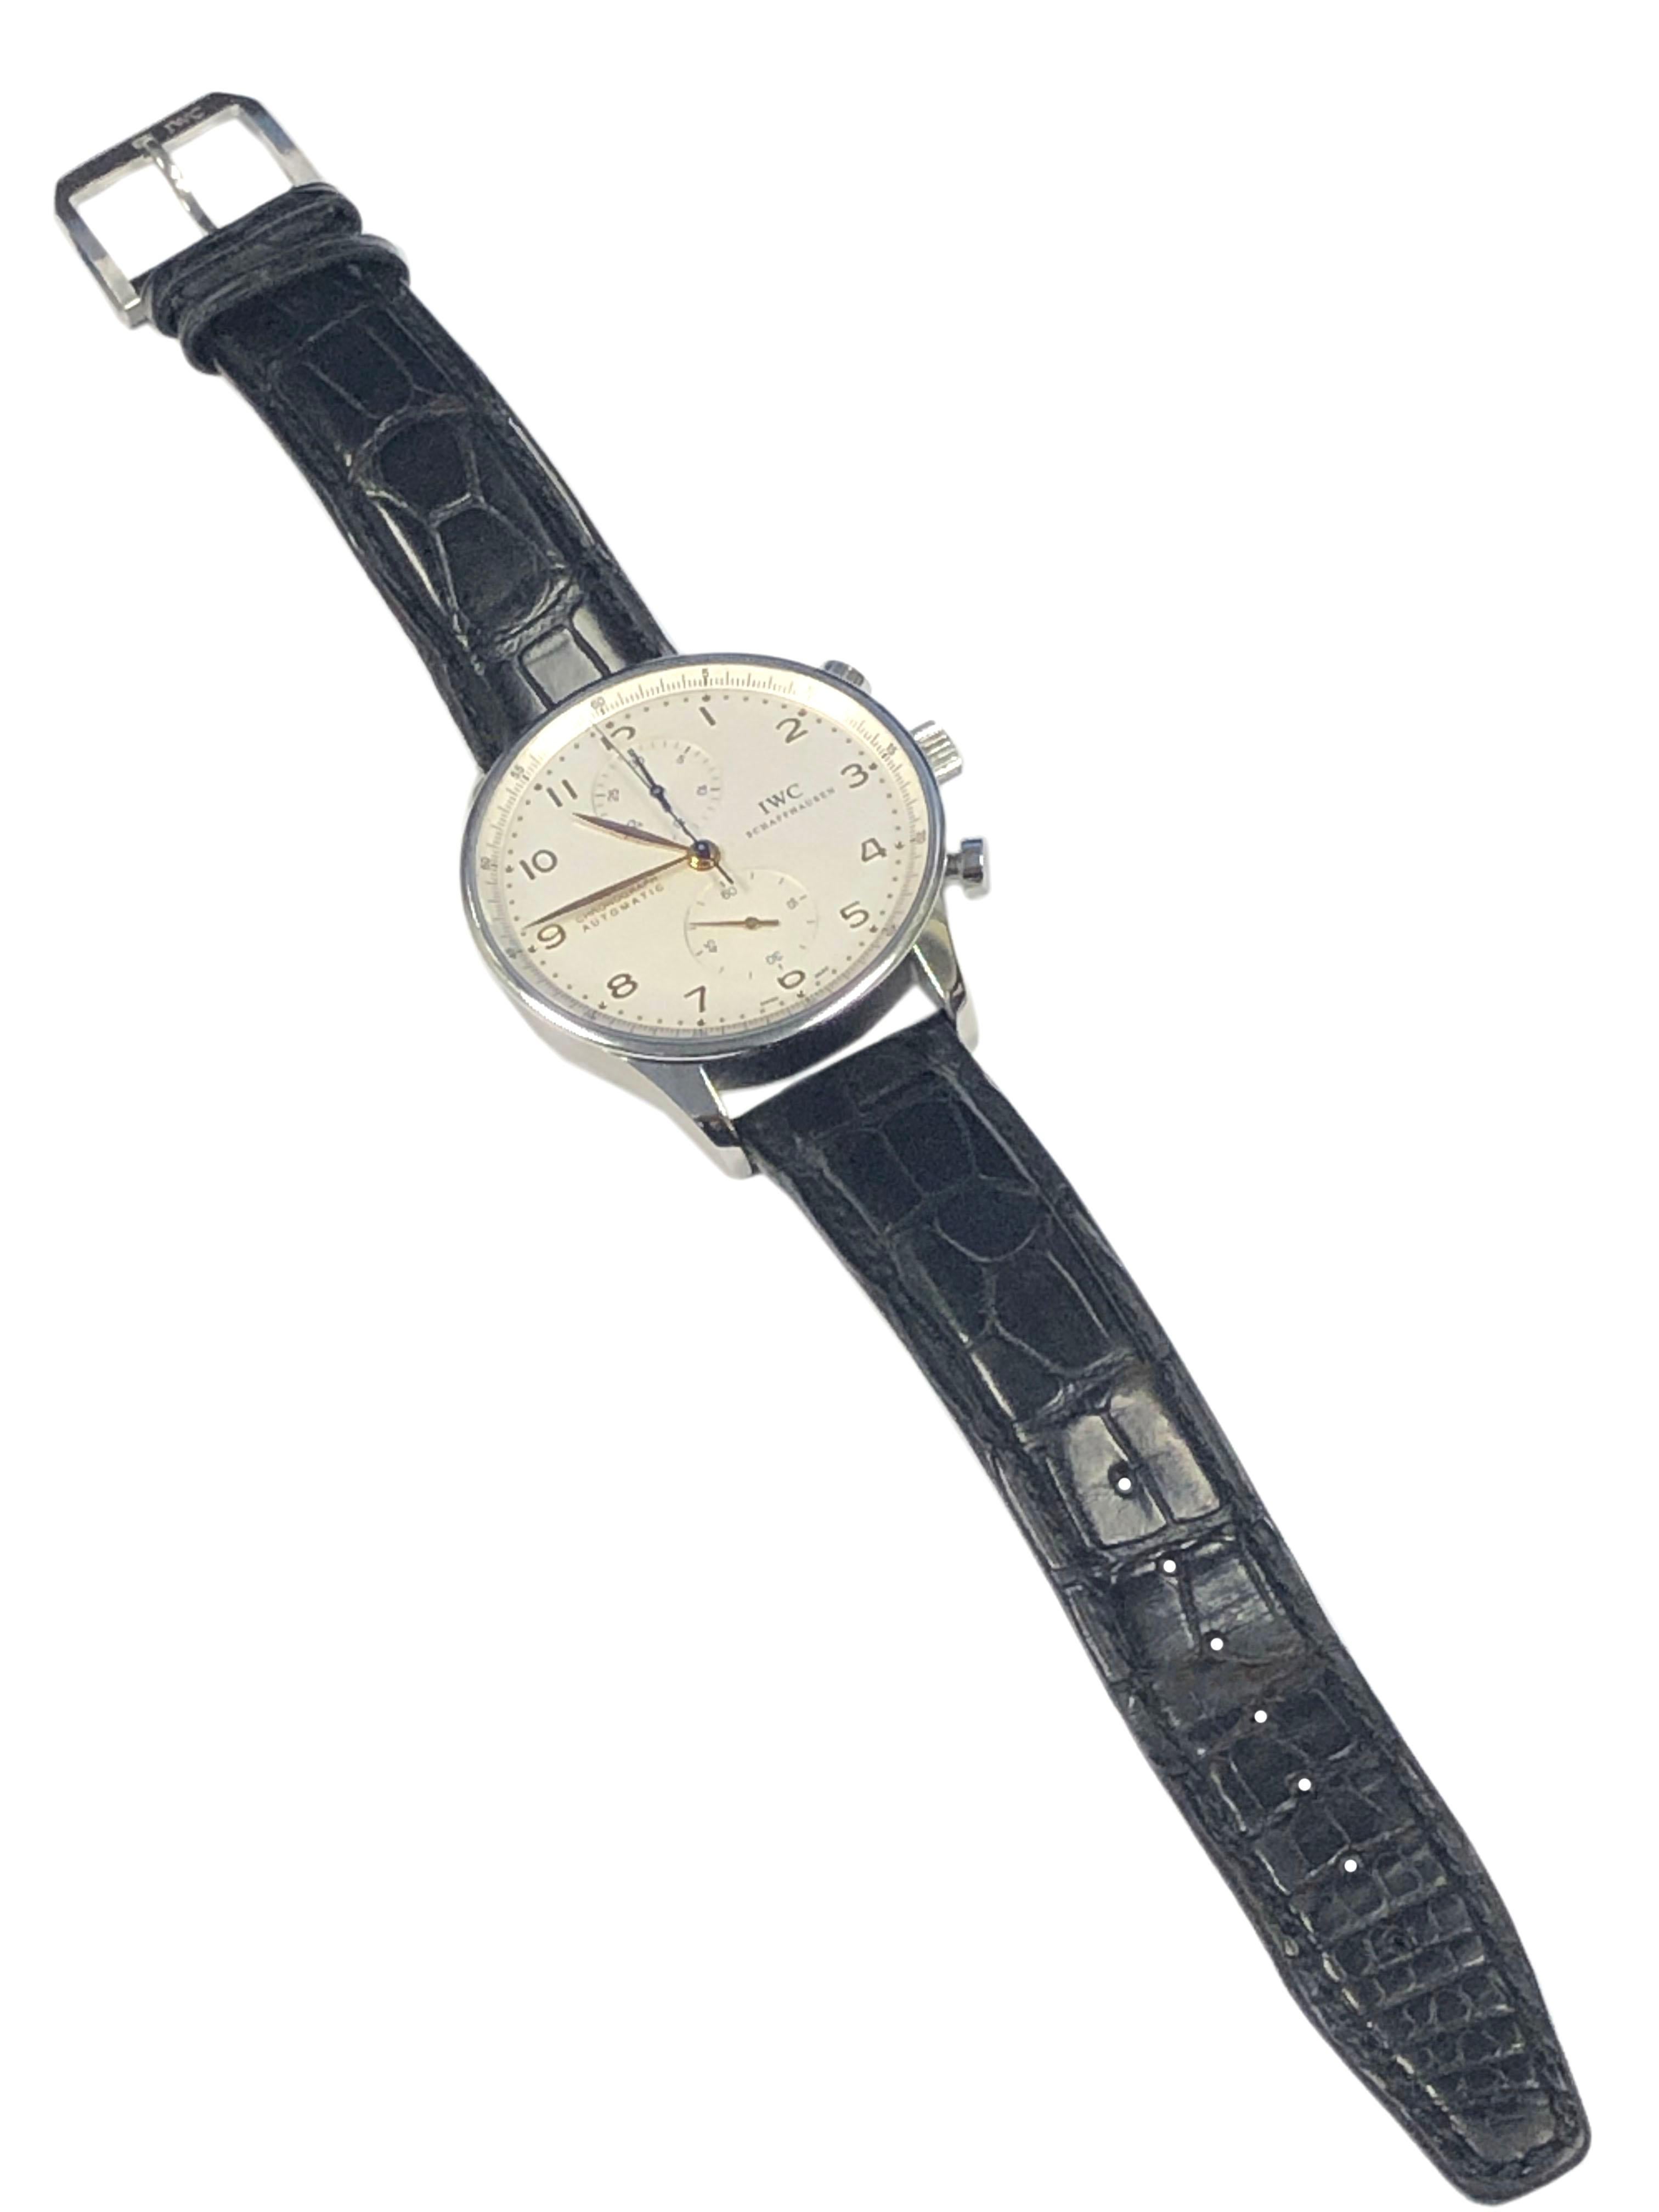 IWC Portuguese Steel Automatic Chronograph Wrist Watch 2